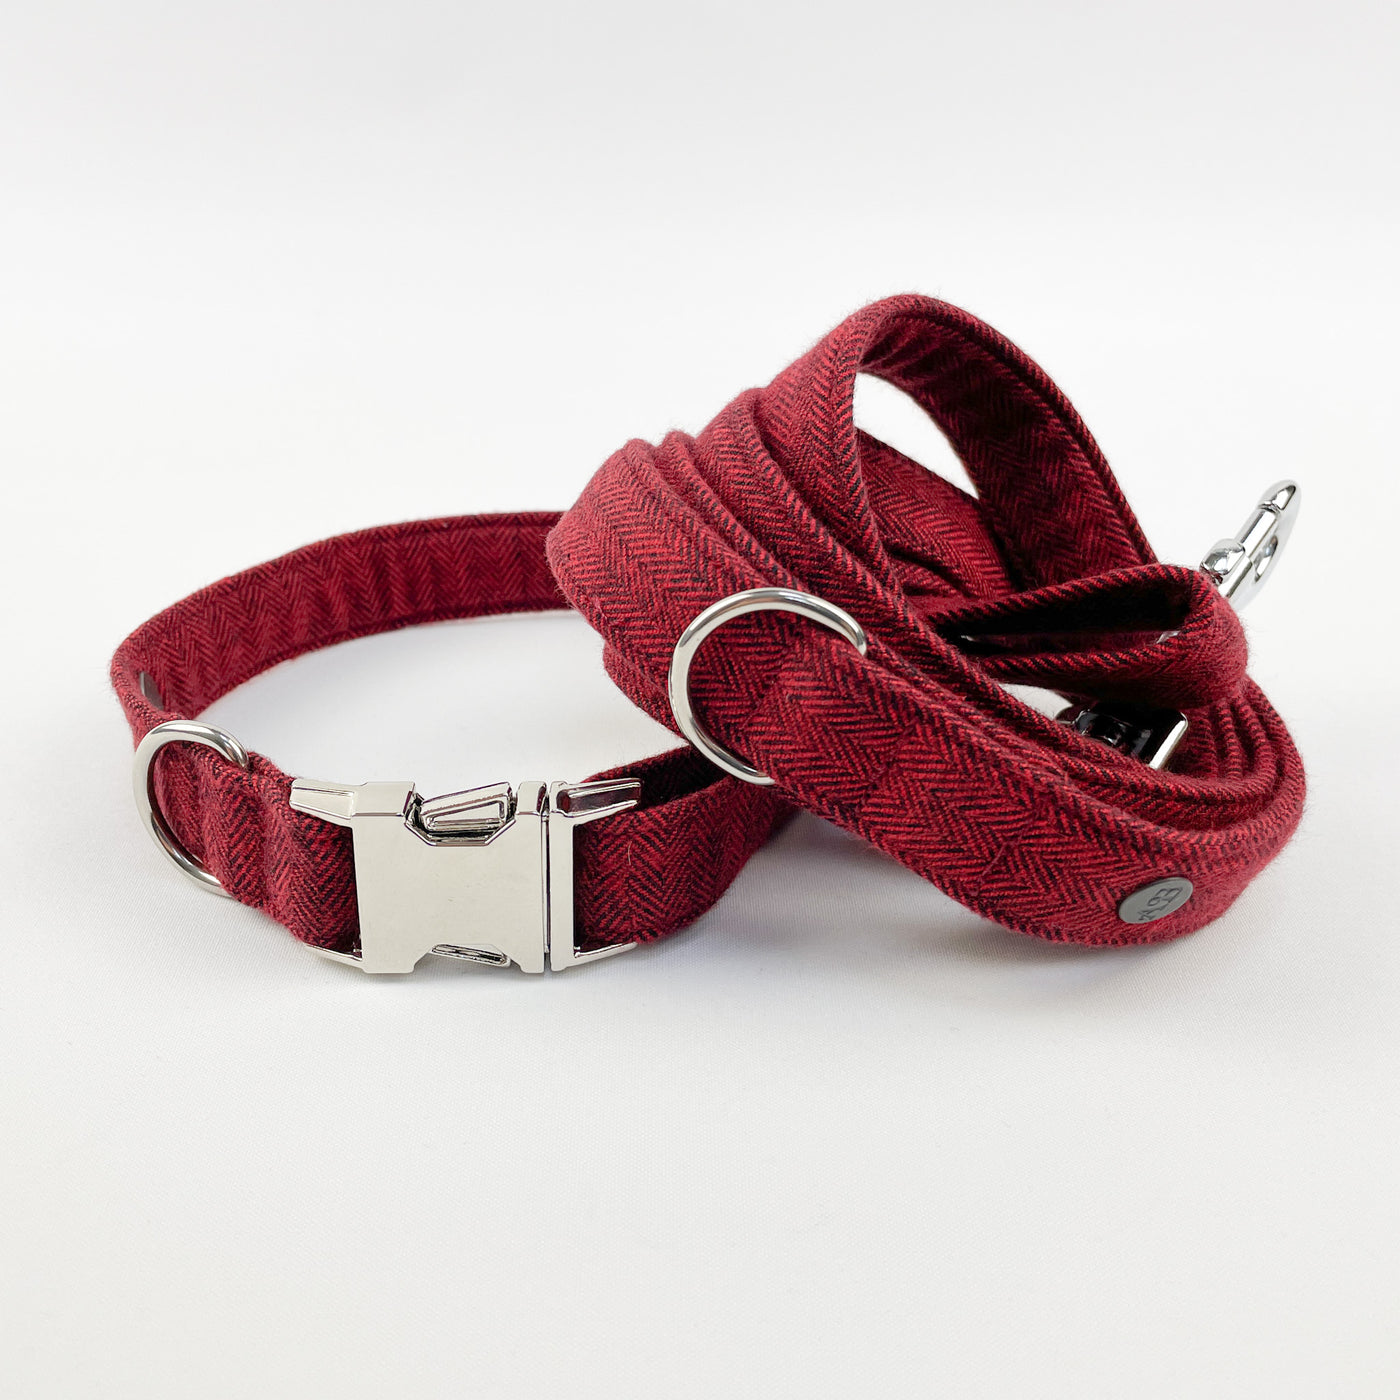 Cranberry Herringbone dog lead and collar